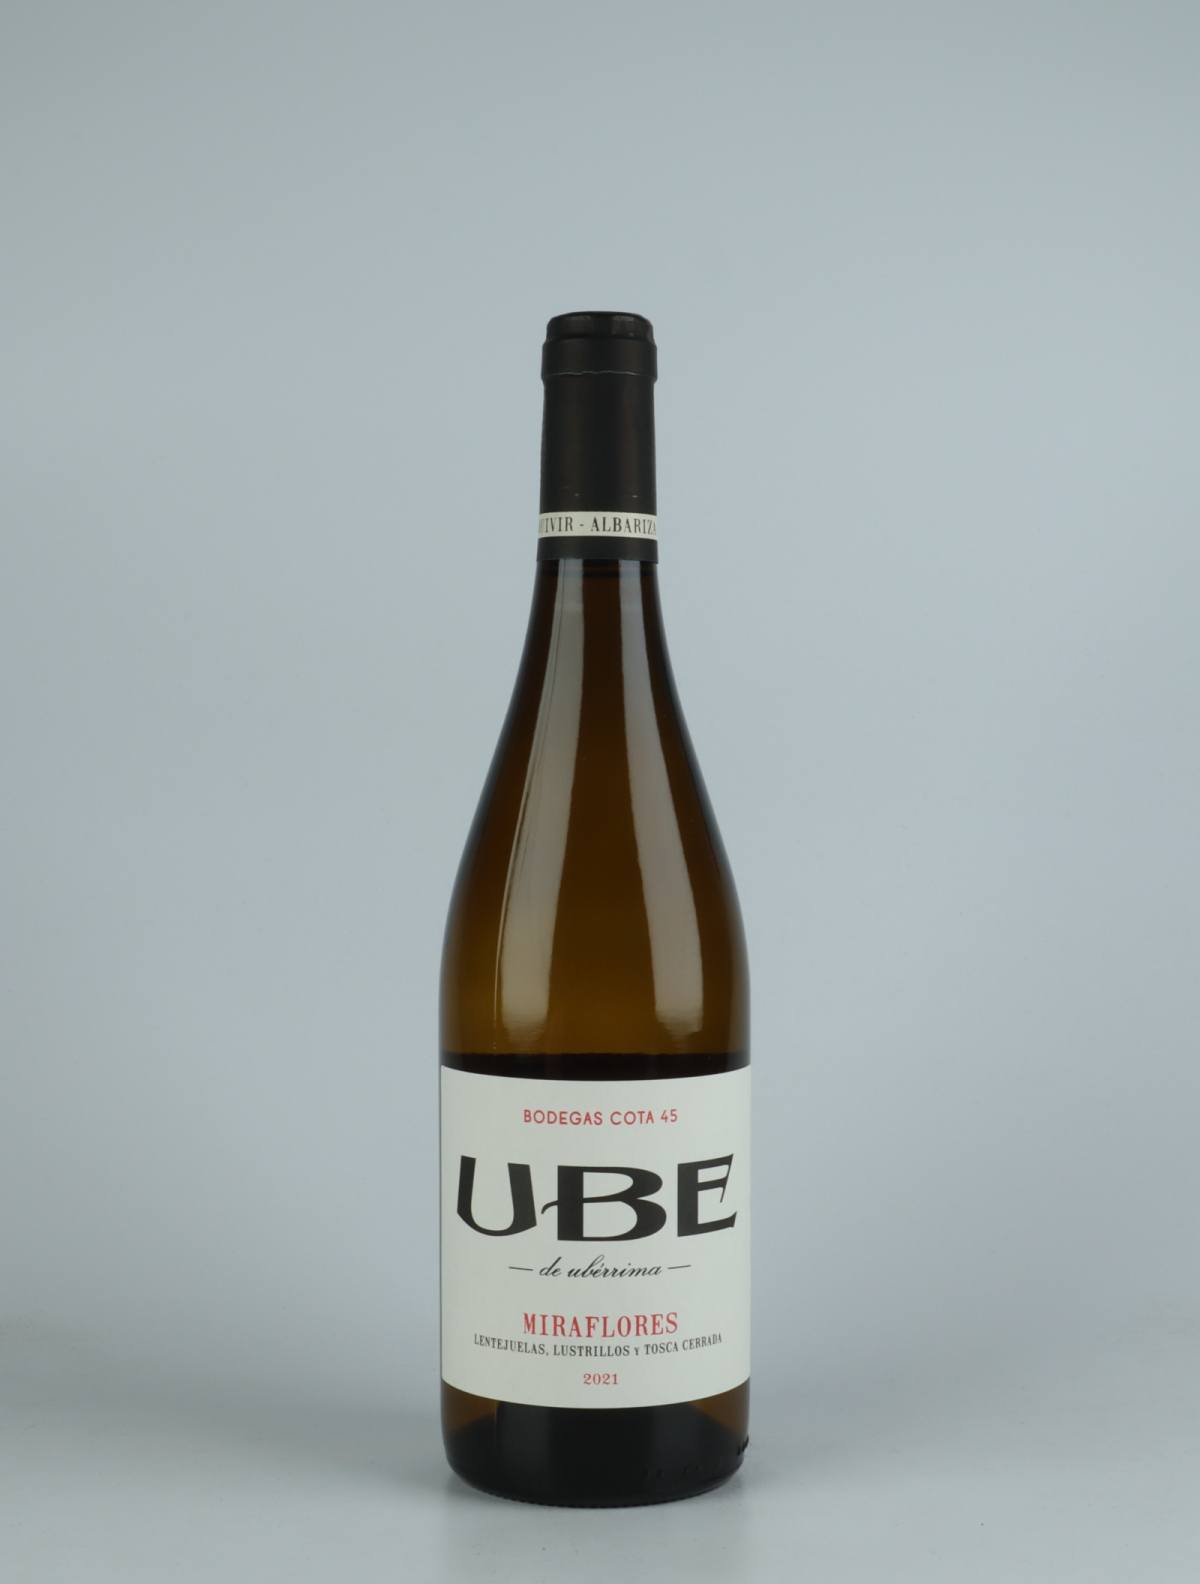 En flaske 2021 UBE Miraflores Hvidvin fra Bodegas Cota 45, Andalusien i Spanien